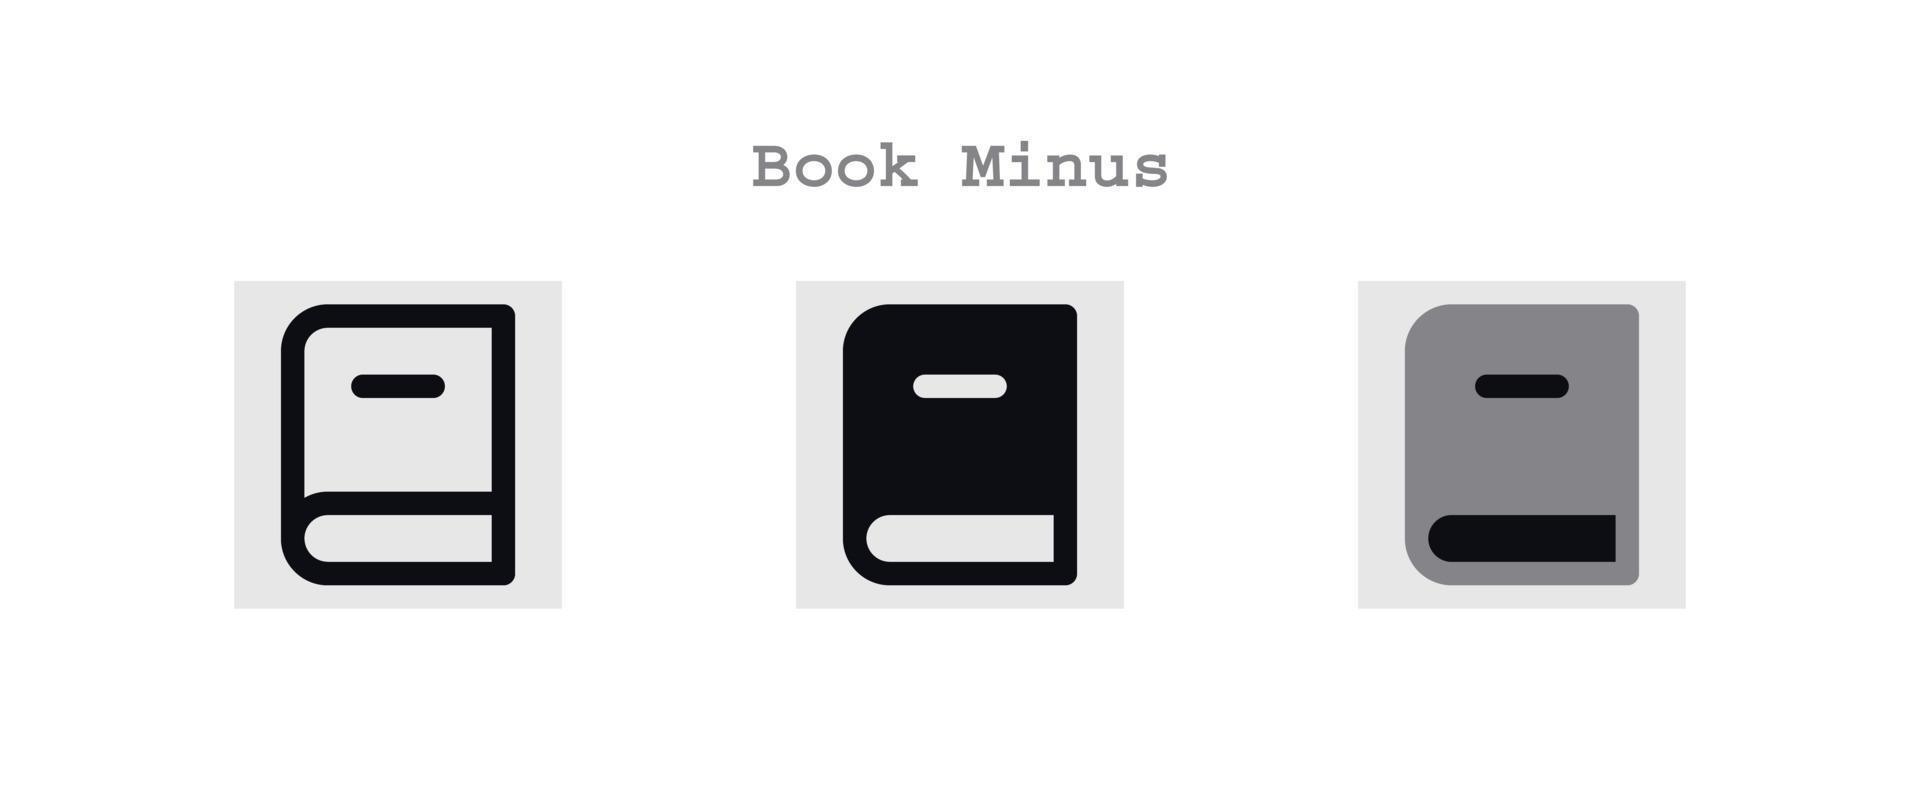 book minus icons set vector